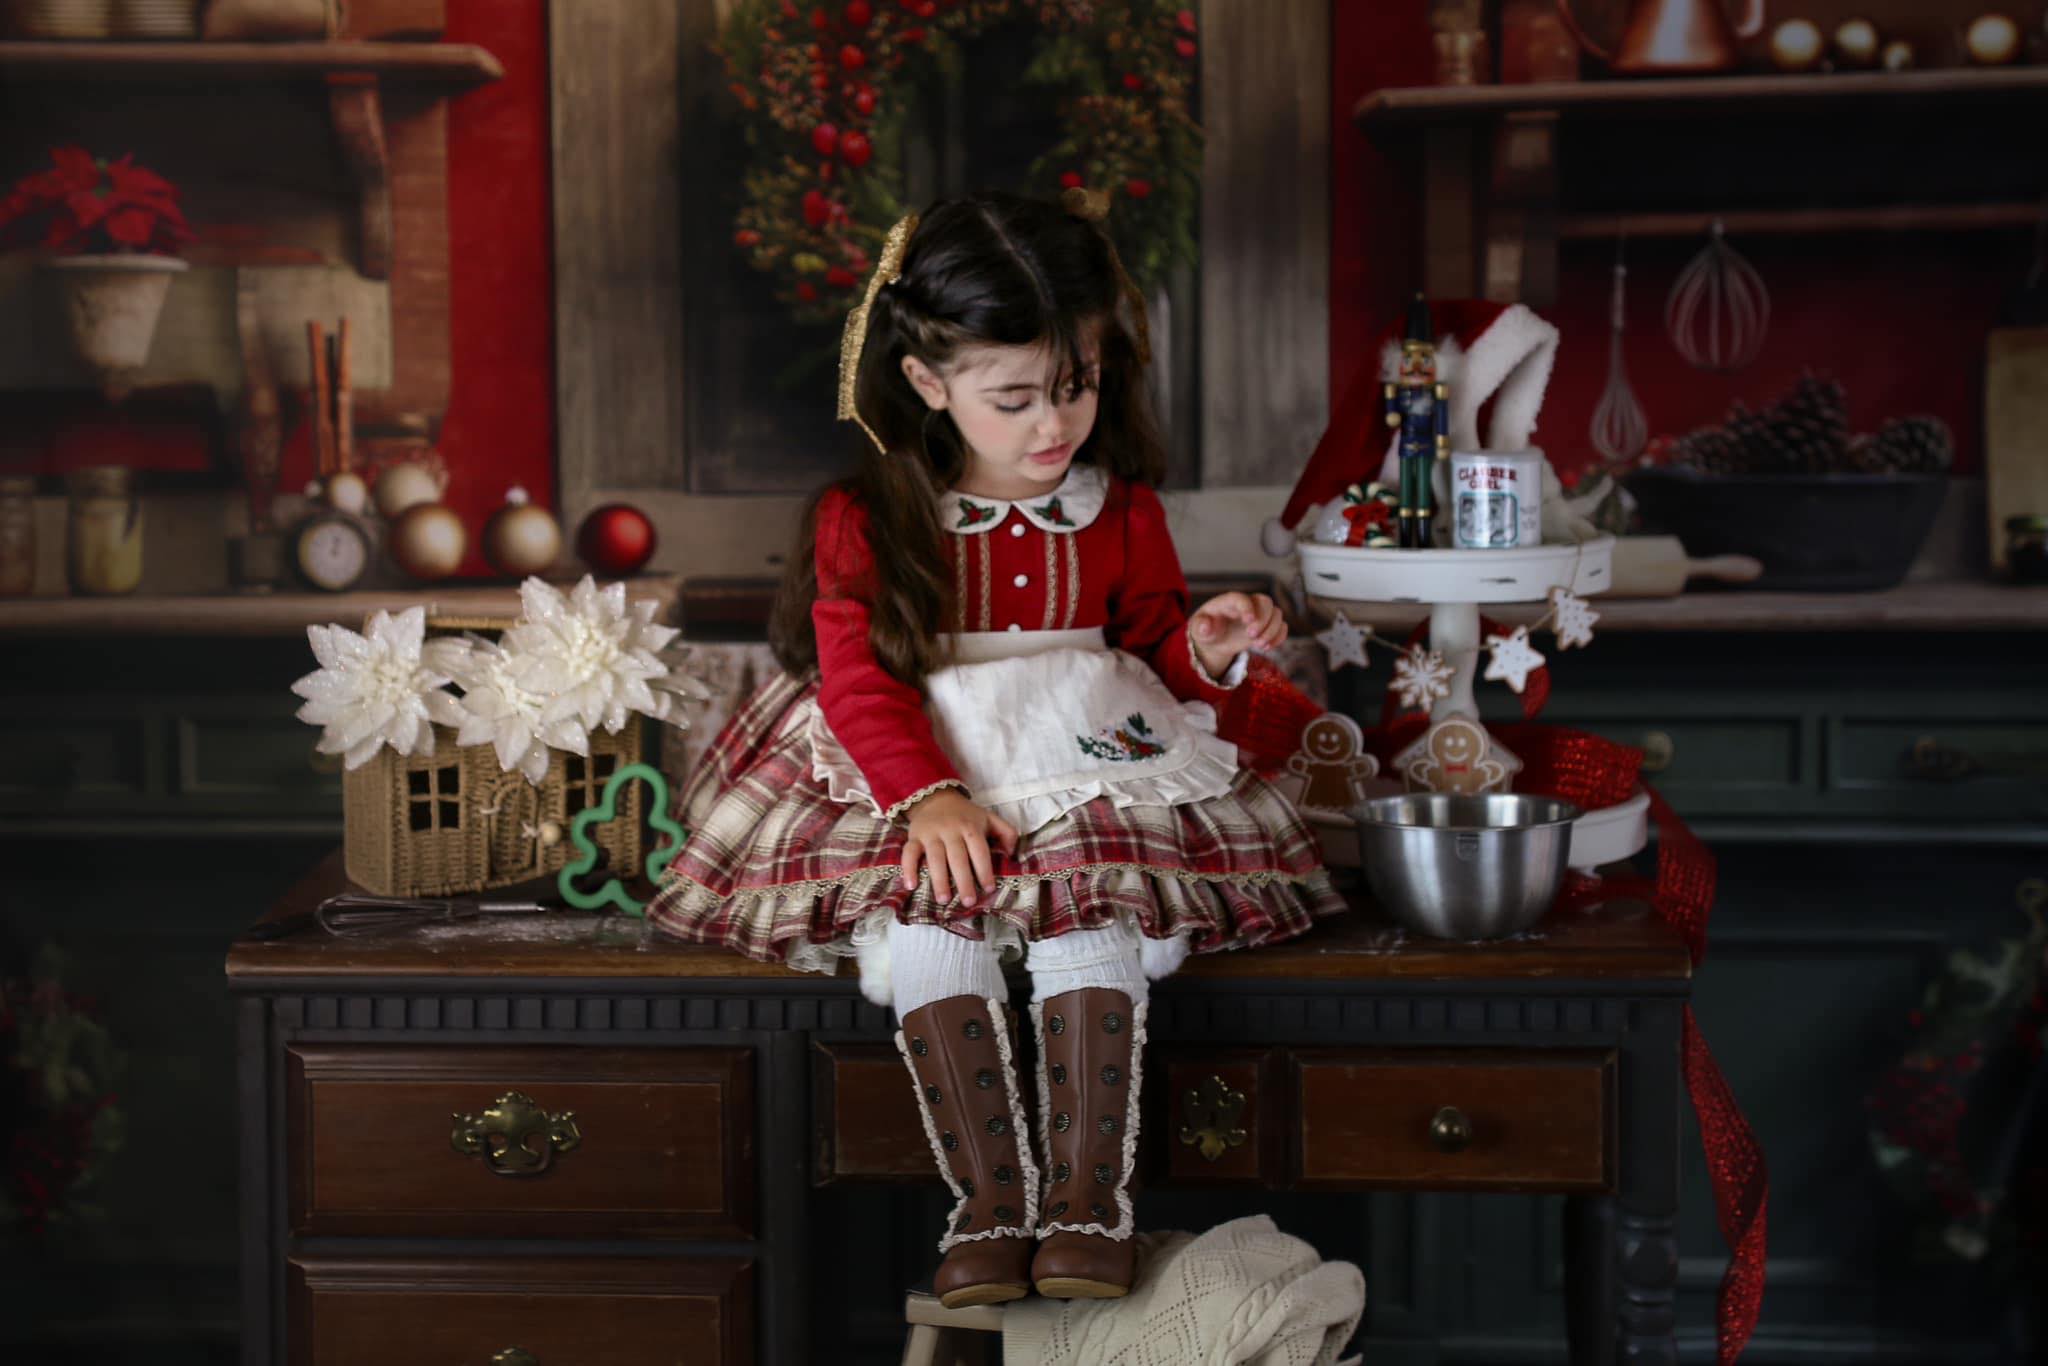 Kate Christmas Kitchen Backdrop Designed by Mandy Ringe Photography